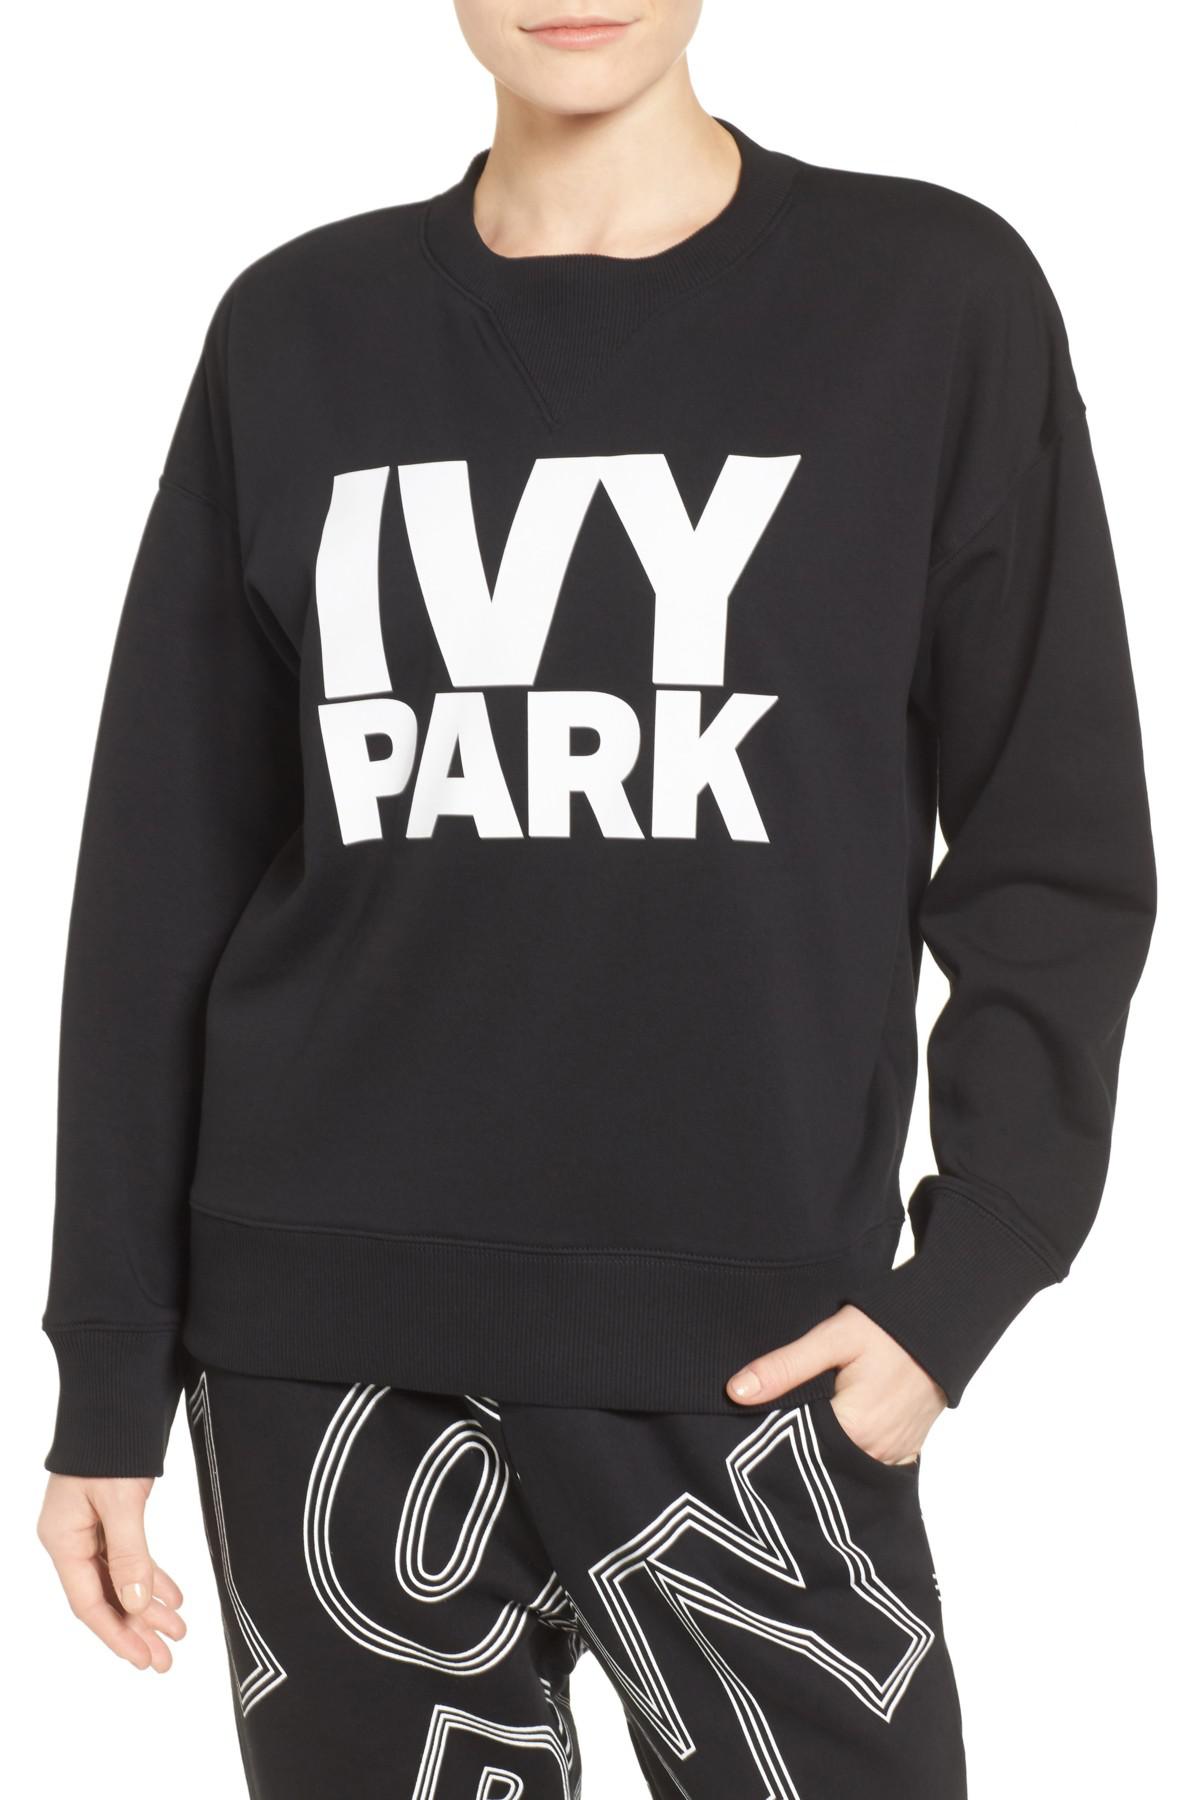 Lyst - Ivy Park Logo Sweatshirt in Black1200 x 1800